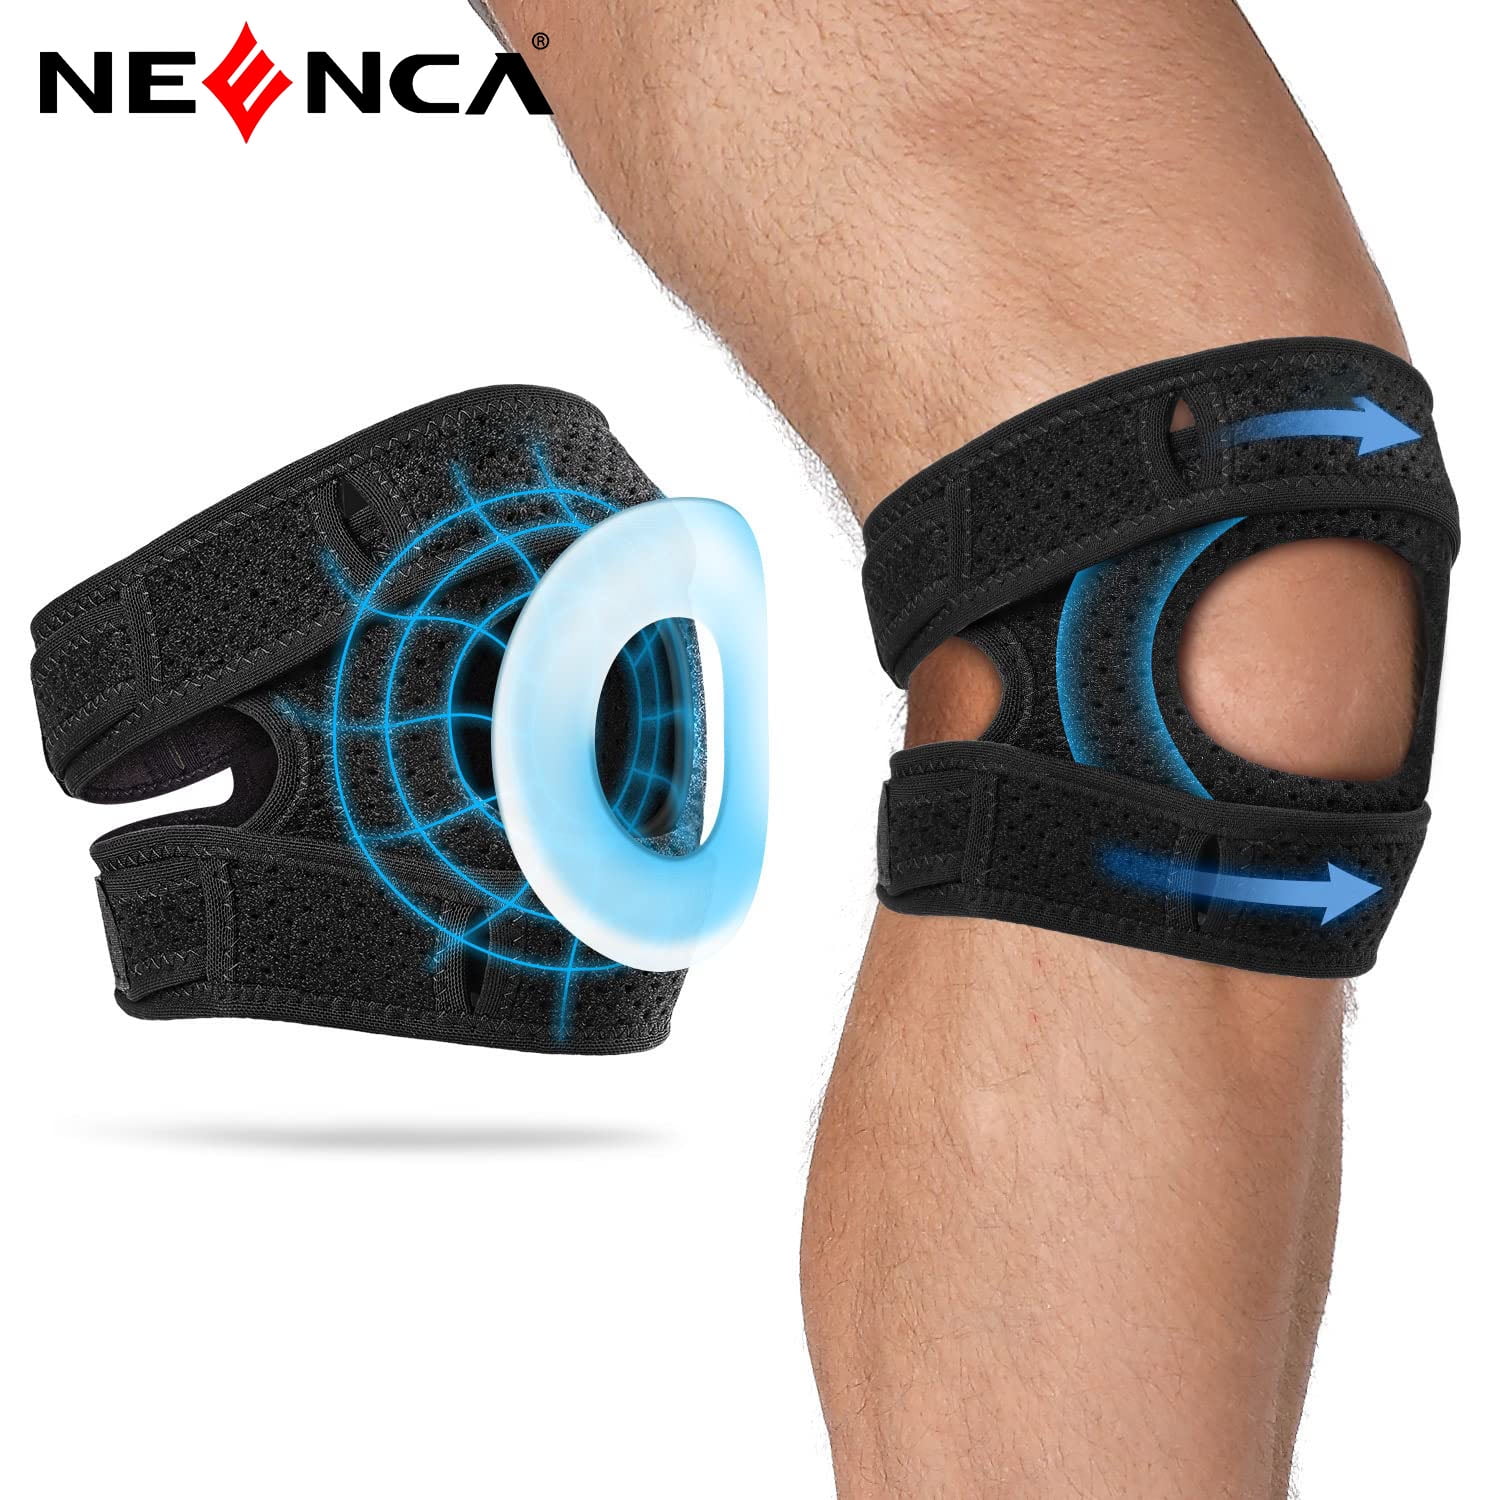 NEENCA Patella Knee Brace, Knee Compression Sleeve for Knee and